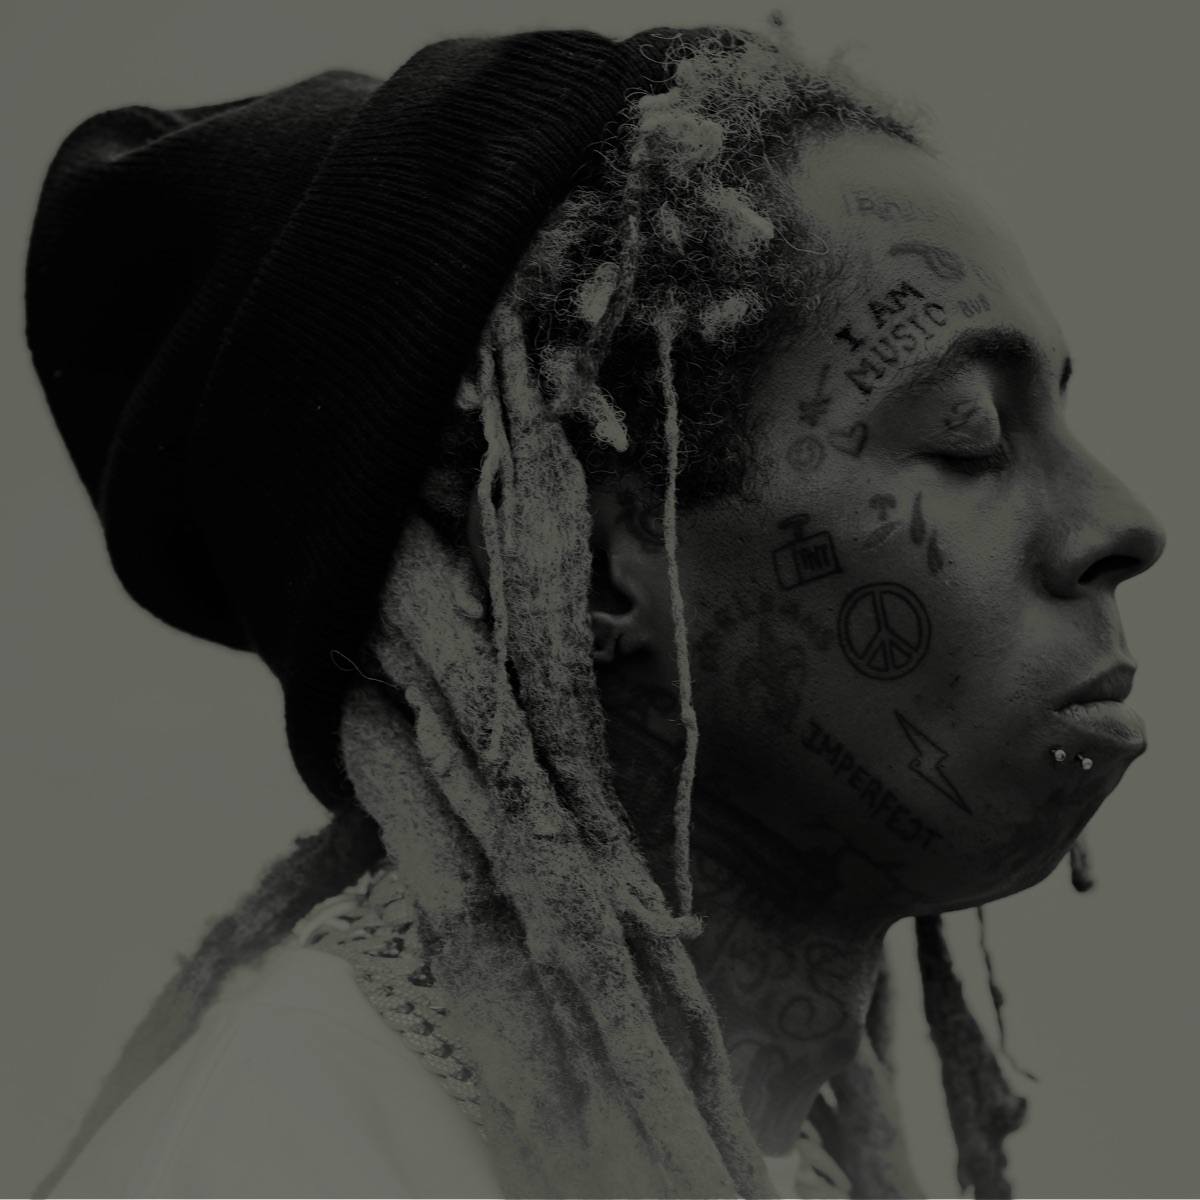 Lil Wayne – I Am Music Album